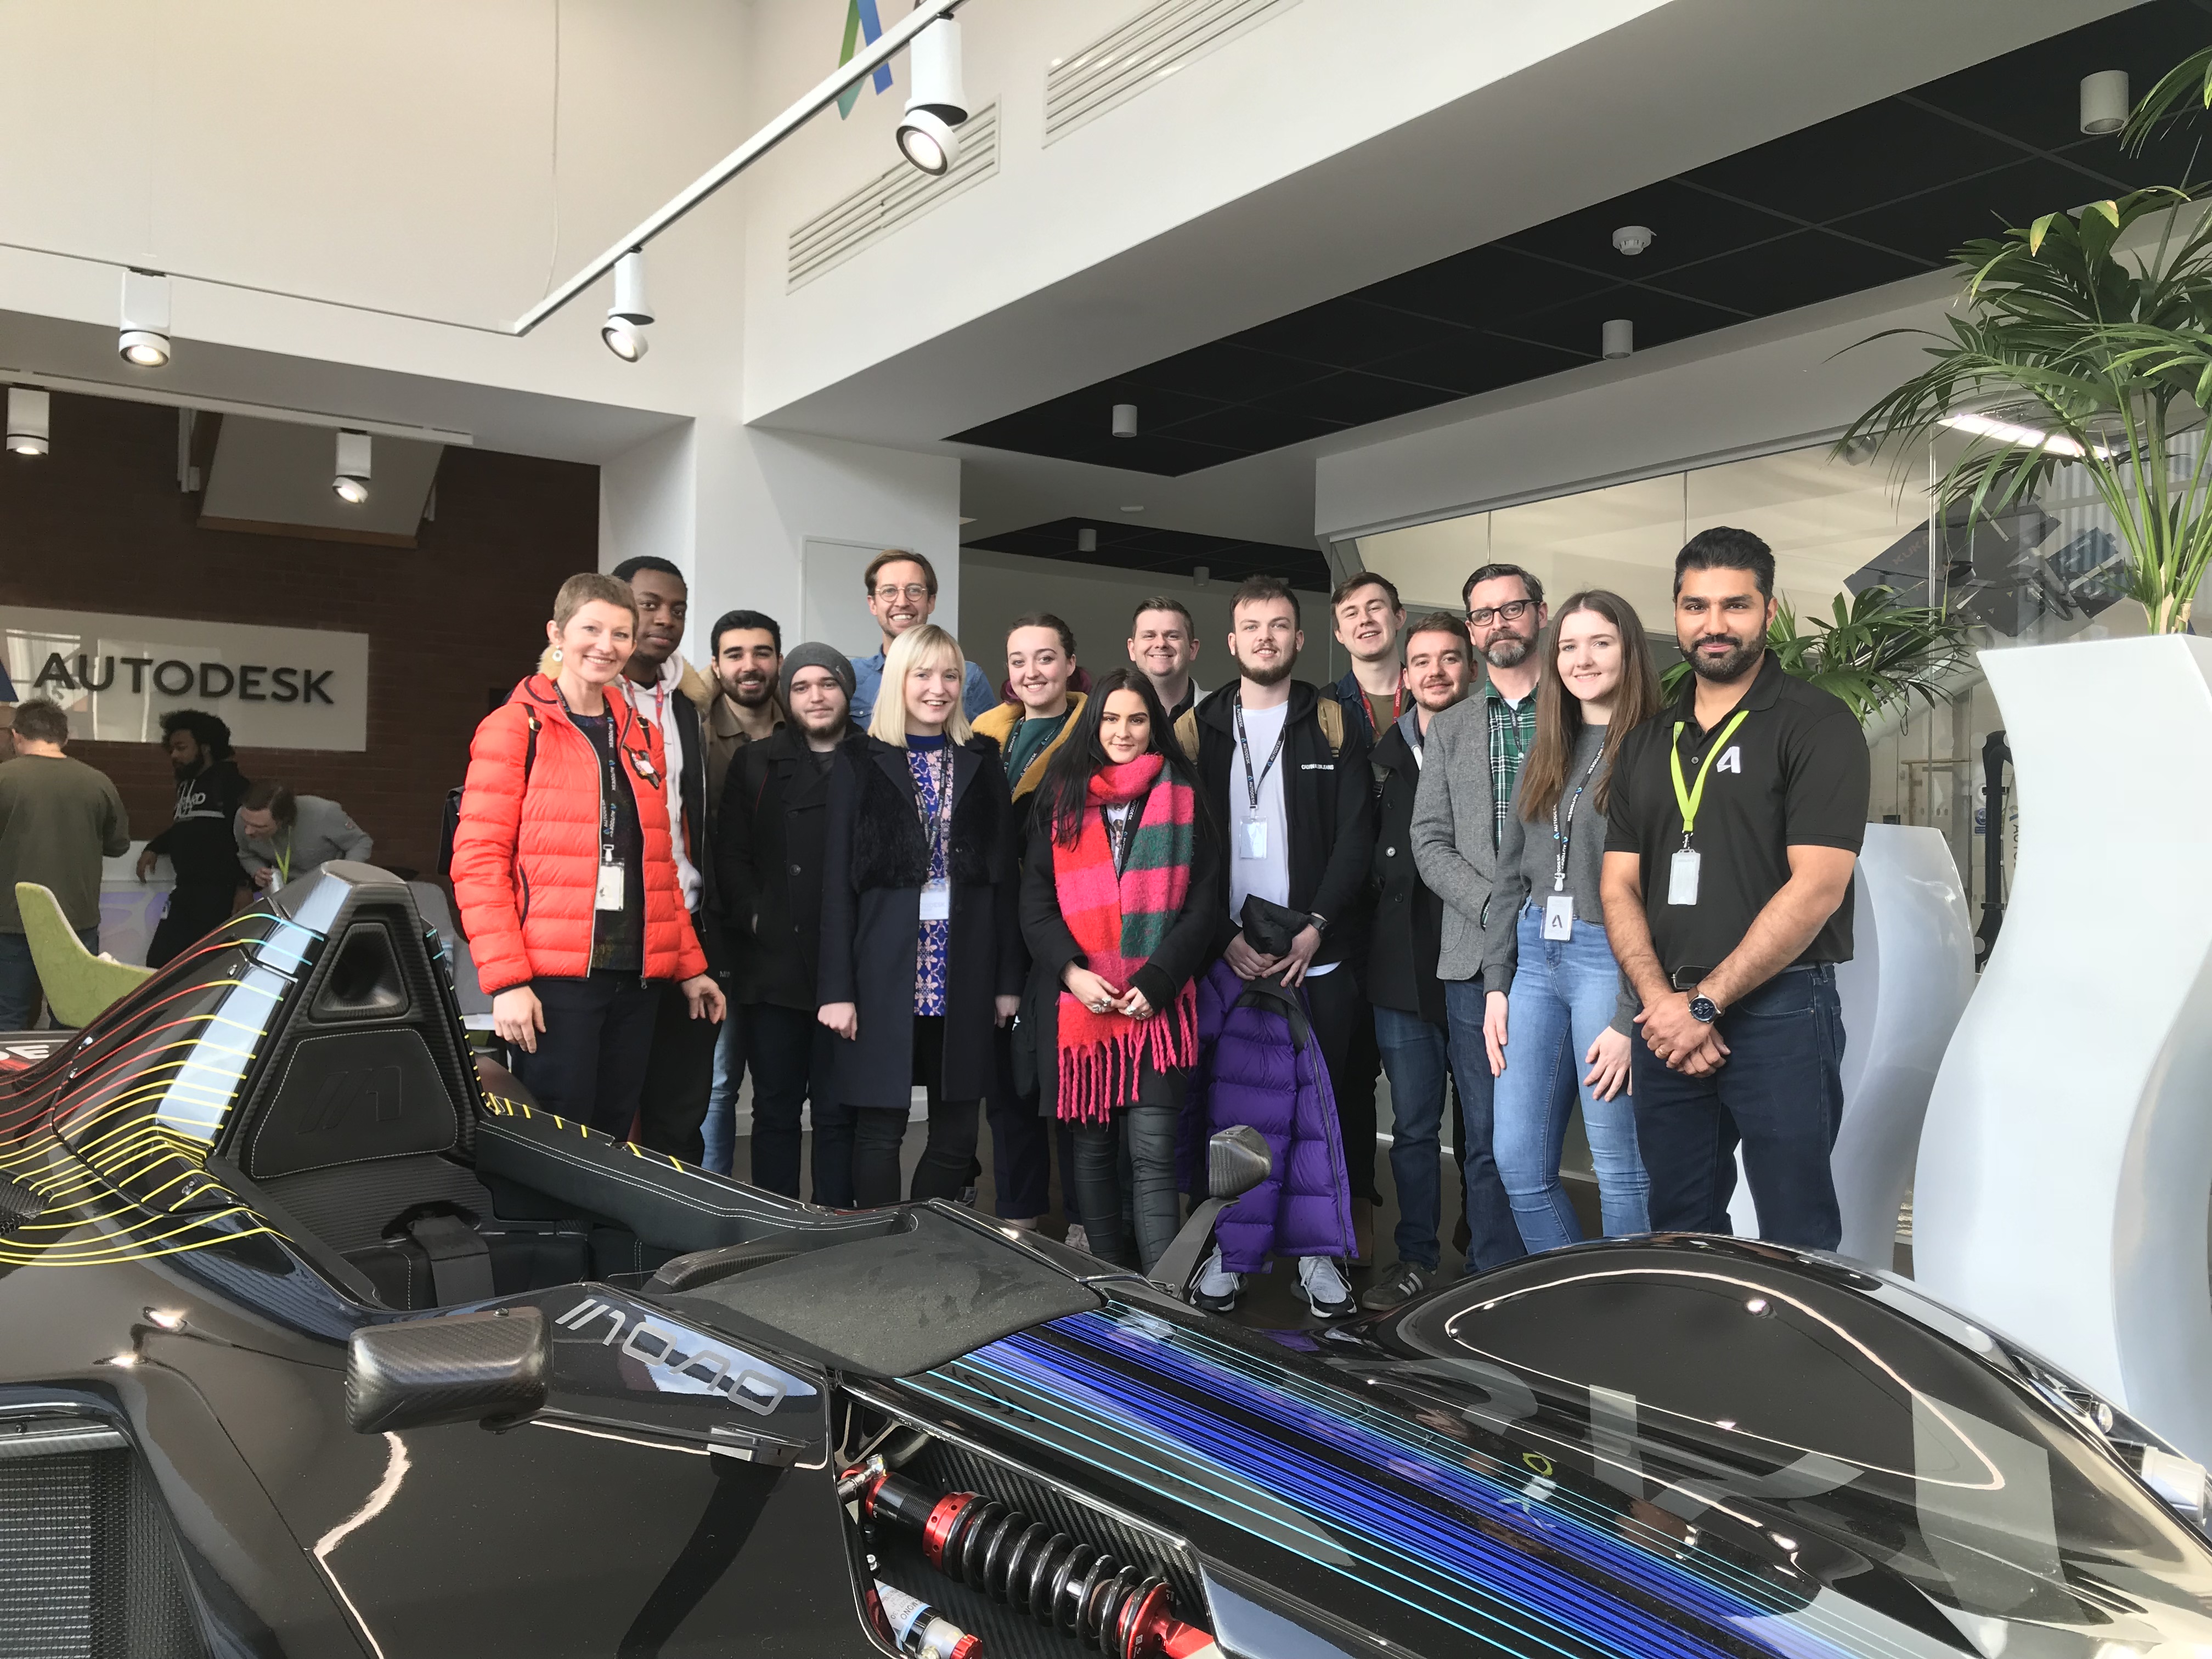 MSc Students visit the Autodesk Advanced Technology Centre - The PrintCity Blog - Manchester Metropolitan University